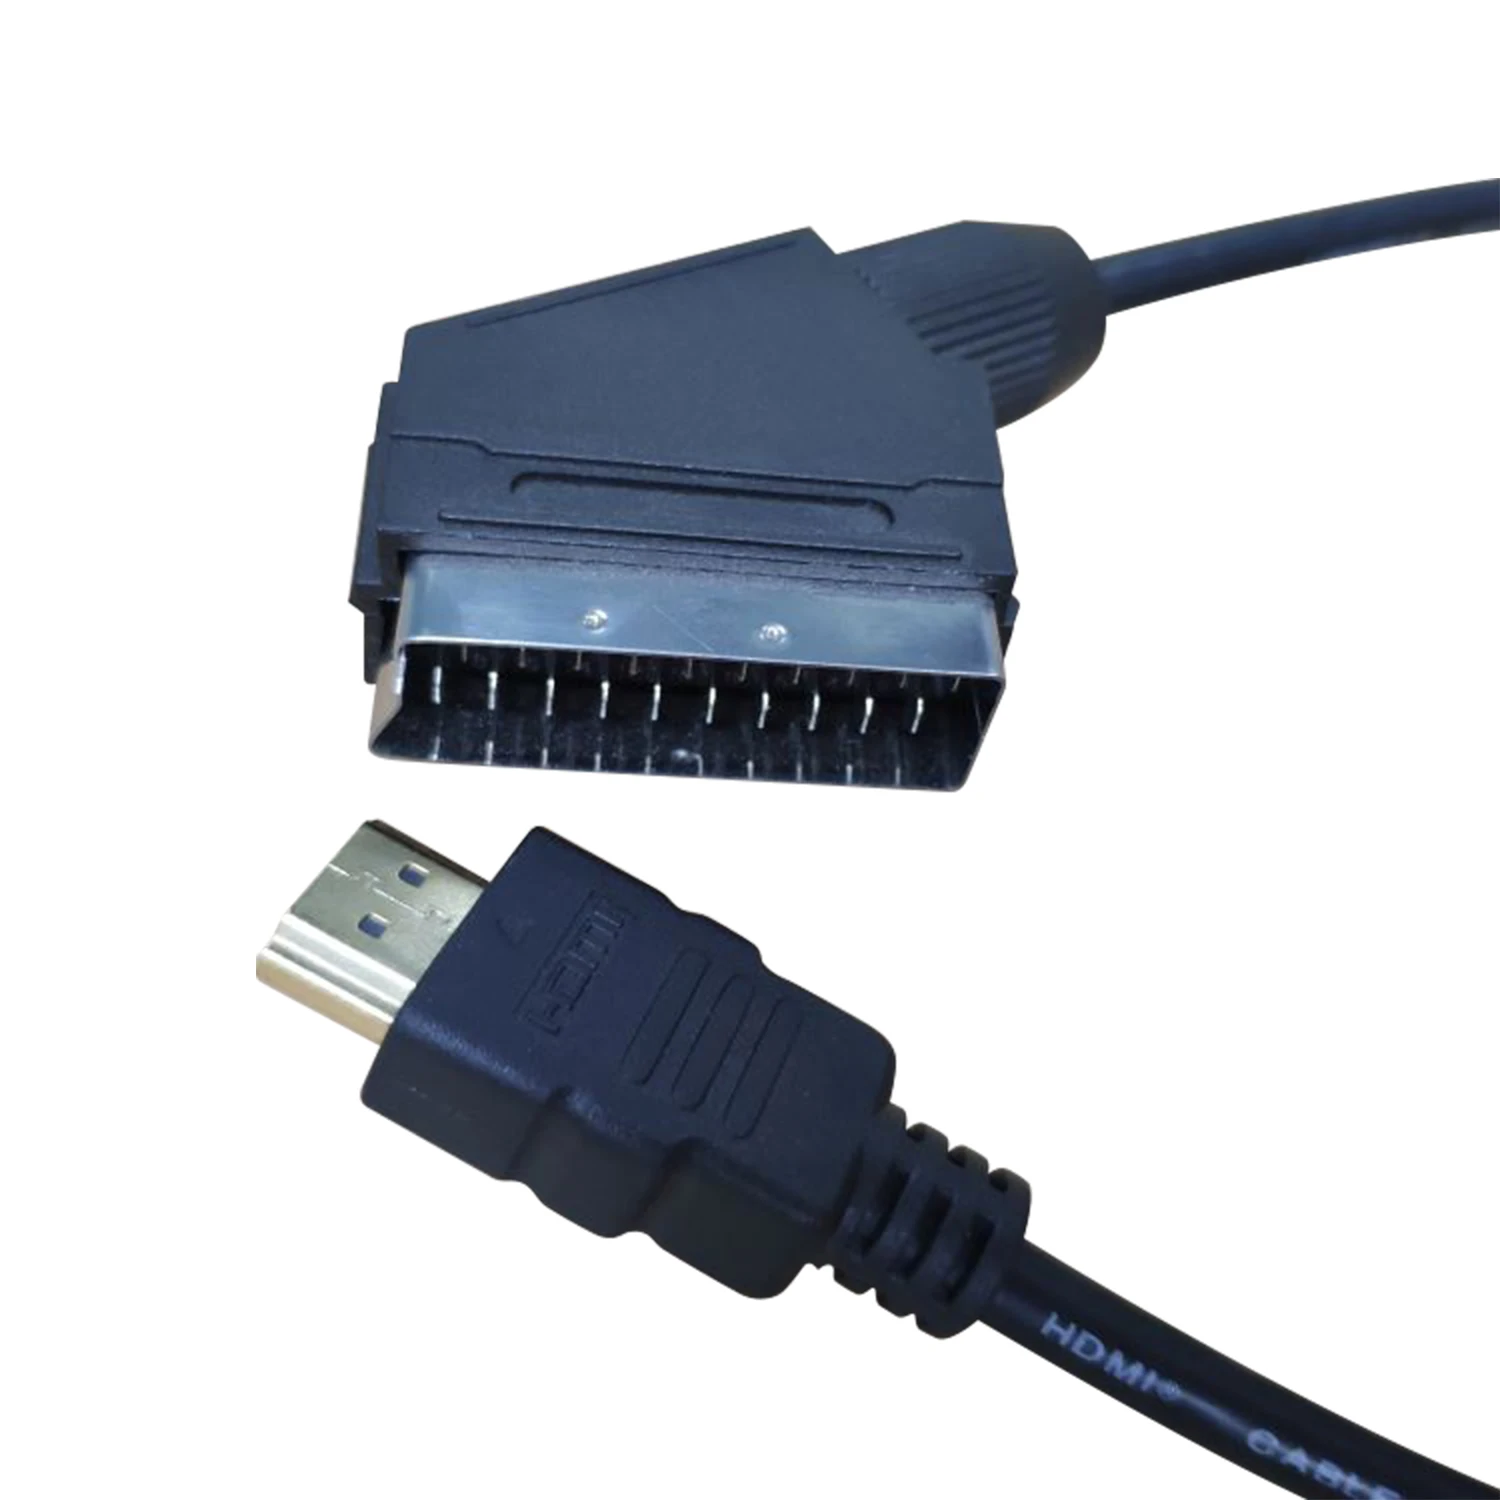 SCART HDMI кабель. Кабель SCART скарт на HDMI. Скарт разъем переходник на HDMI. Провод скарт на HDMI. Скарт переходник для телевизора